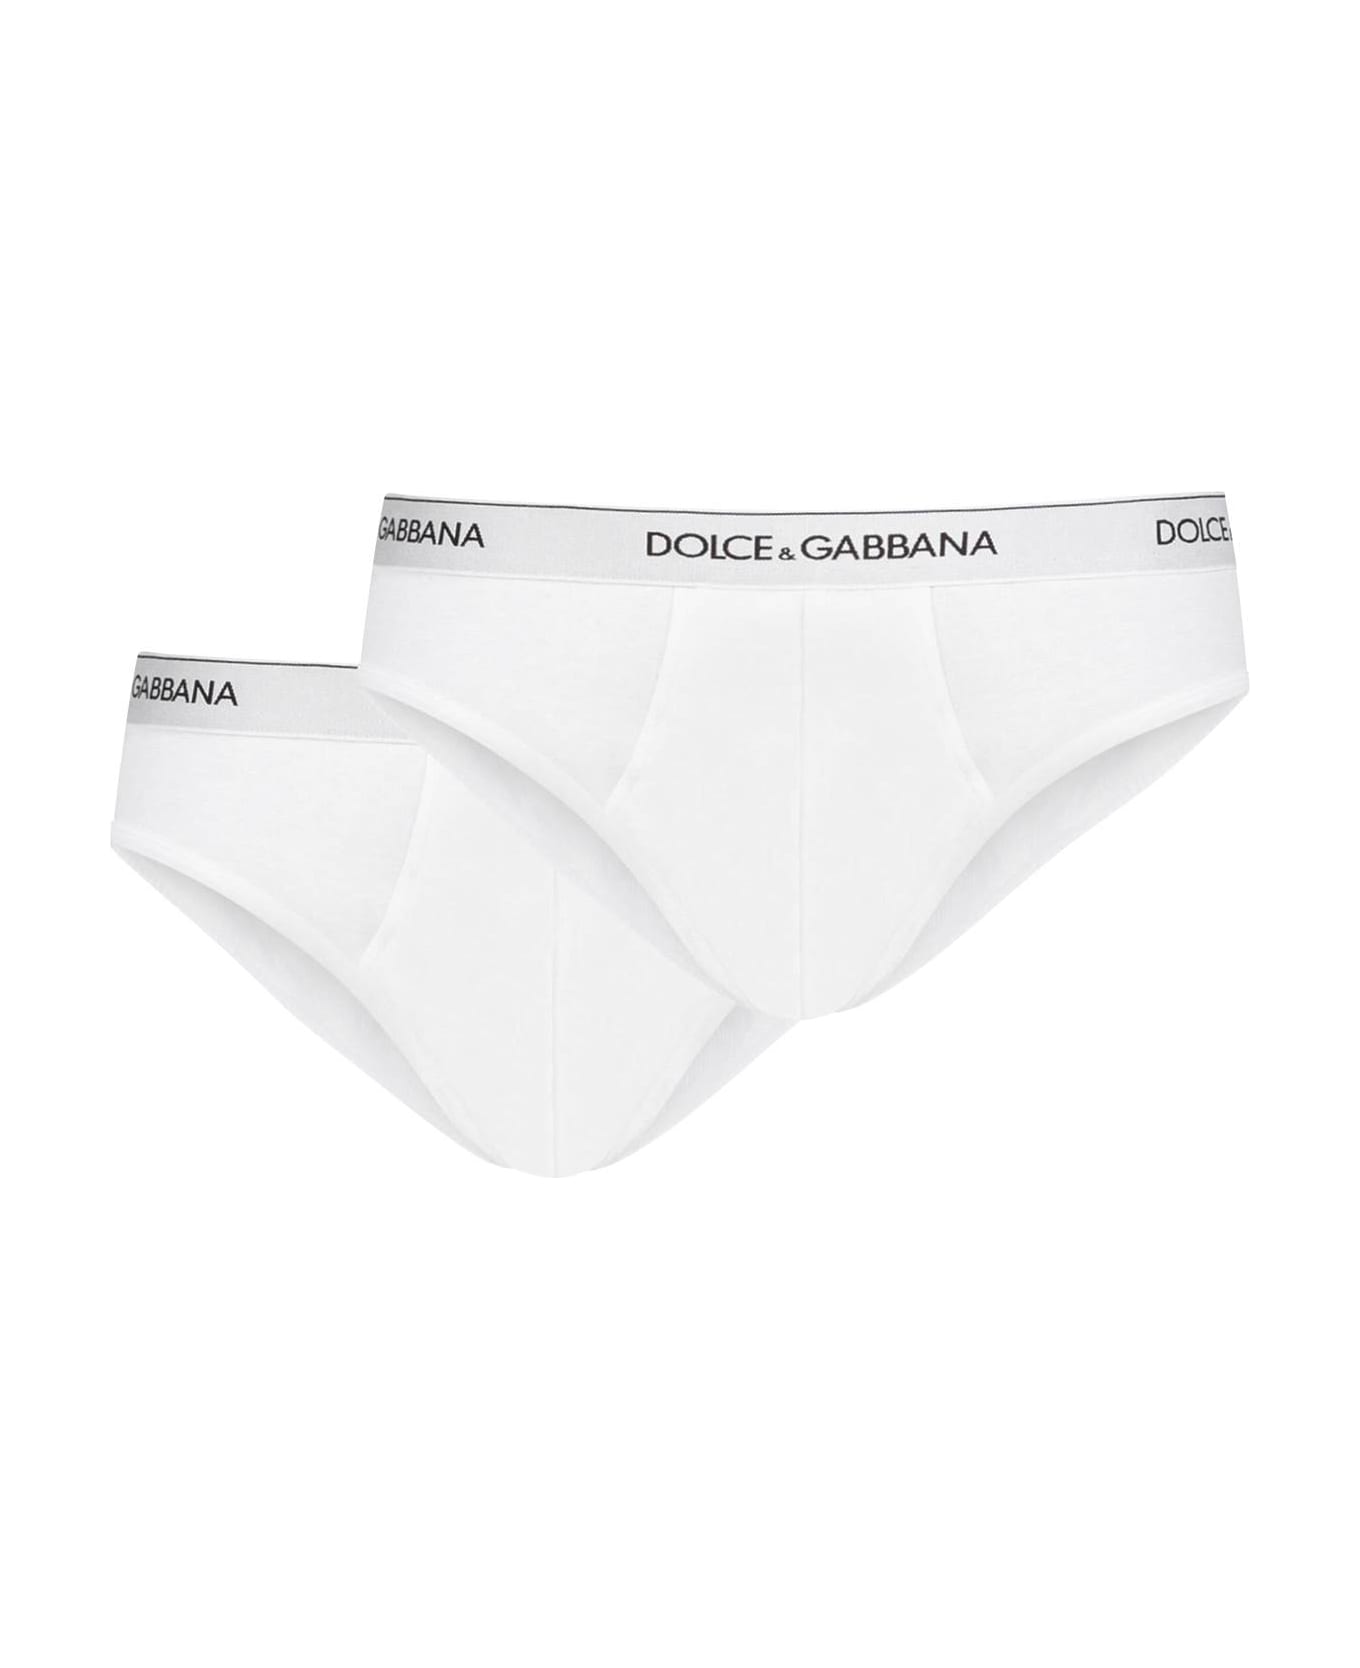 Dolce & Gabbana White Cotton Briefs - White